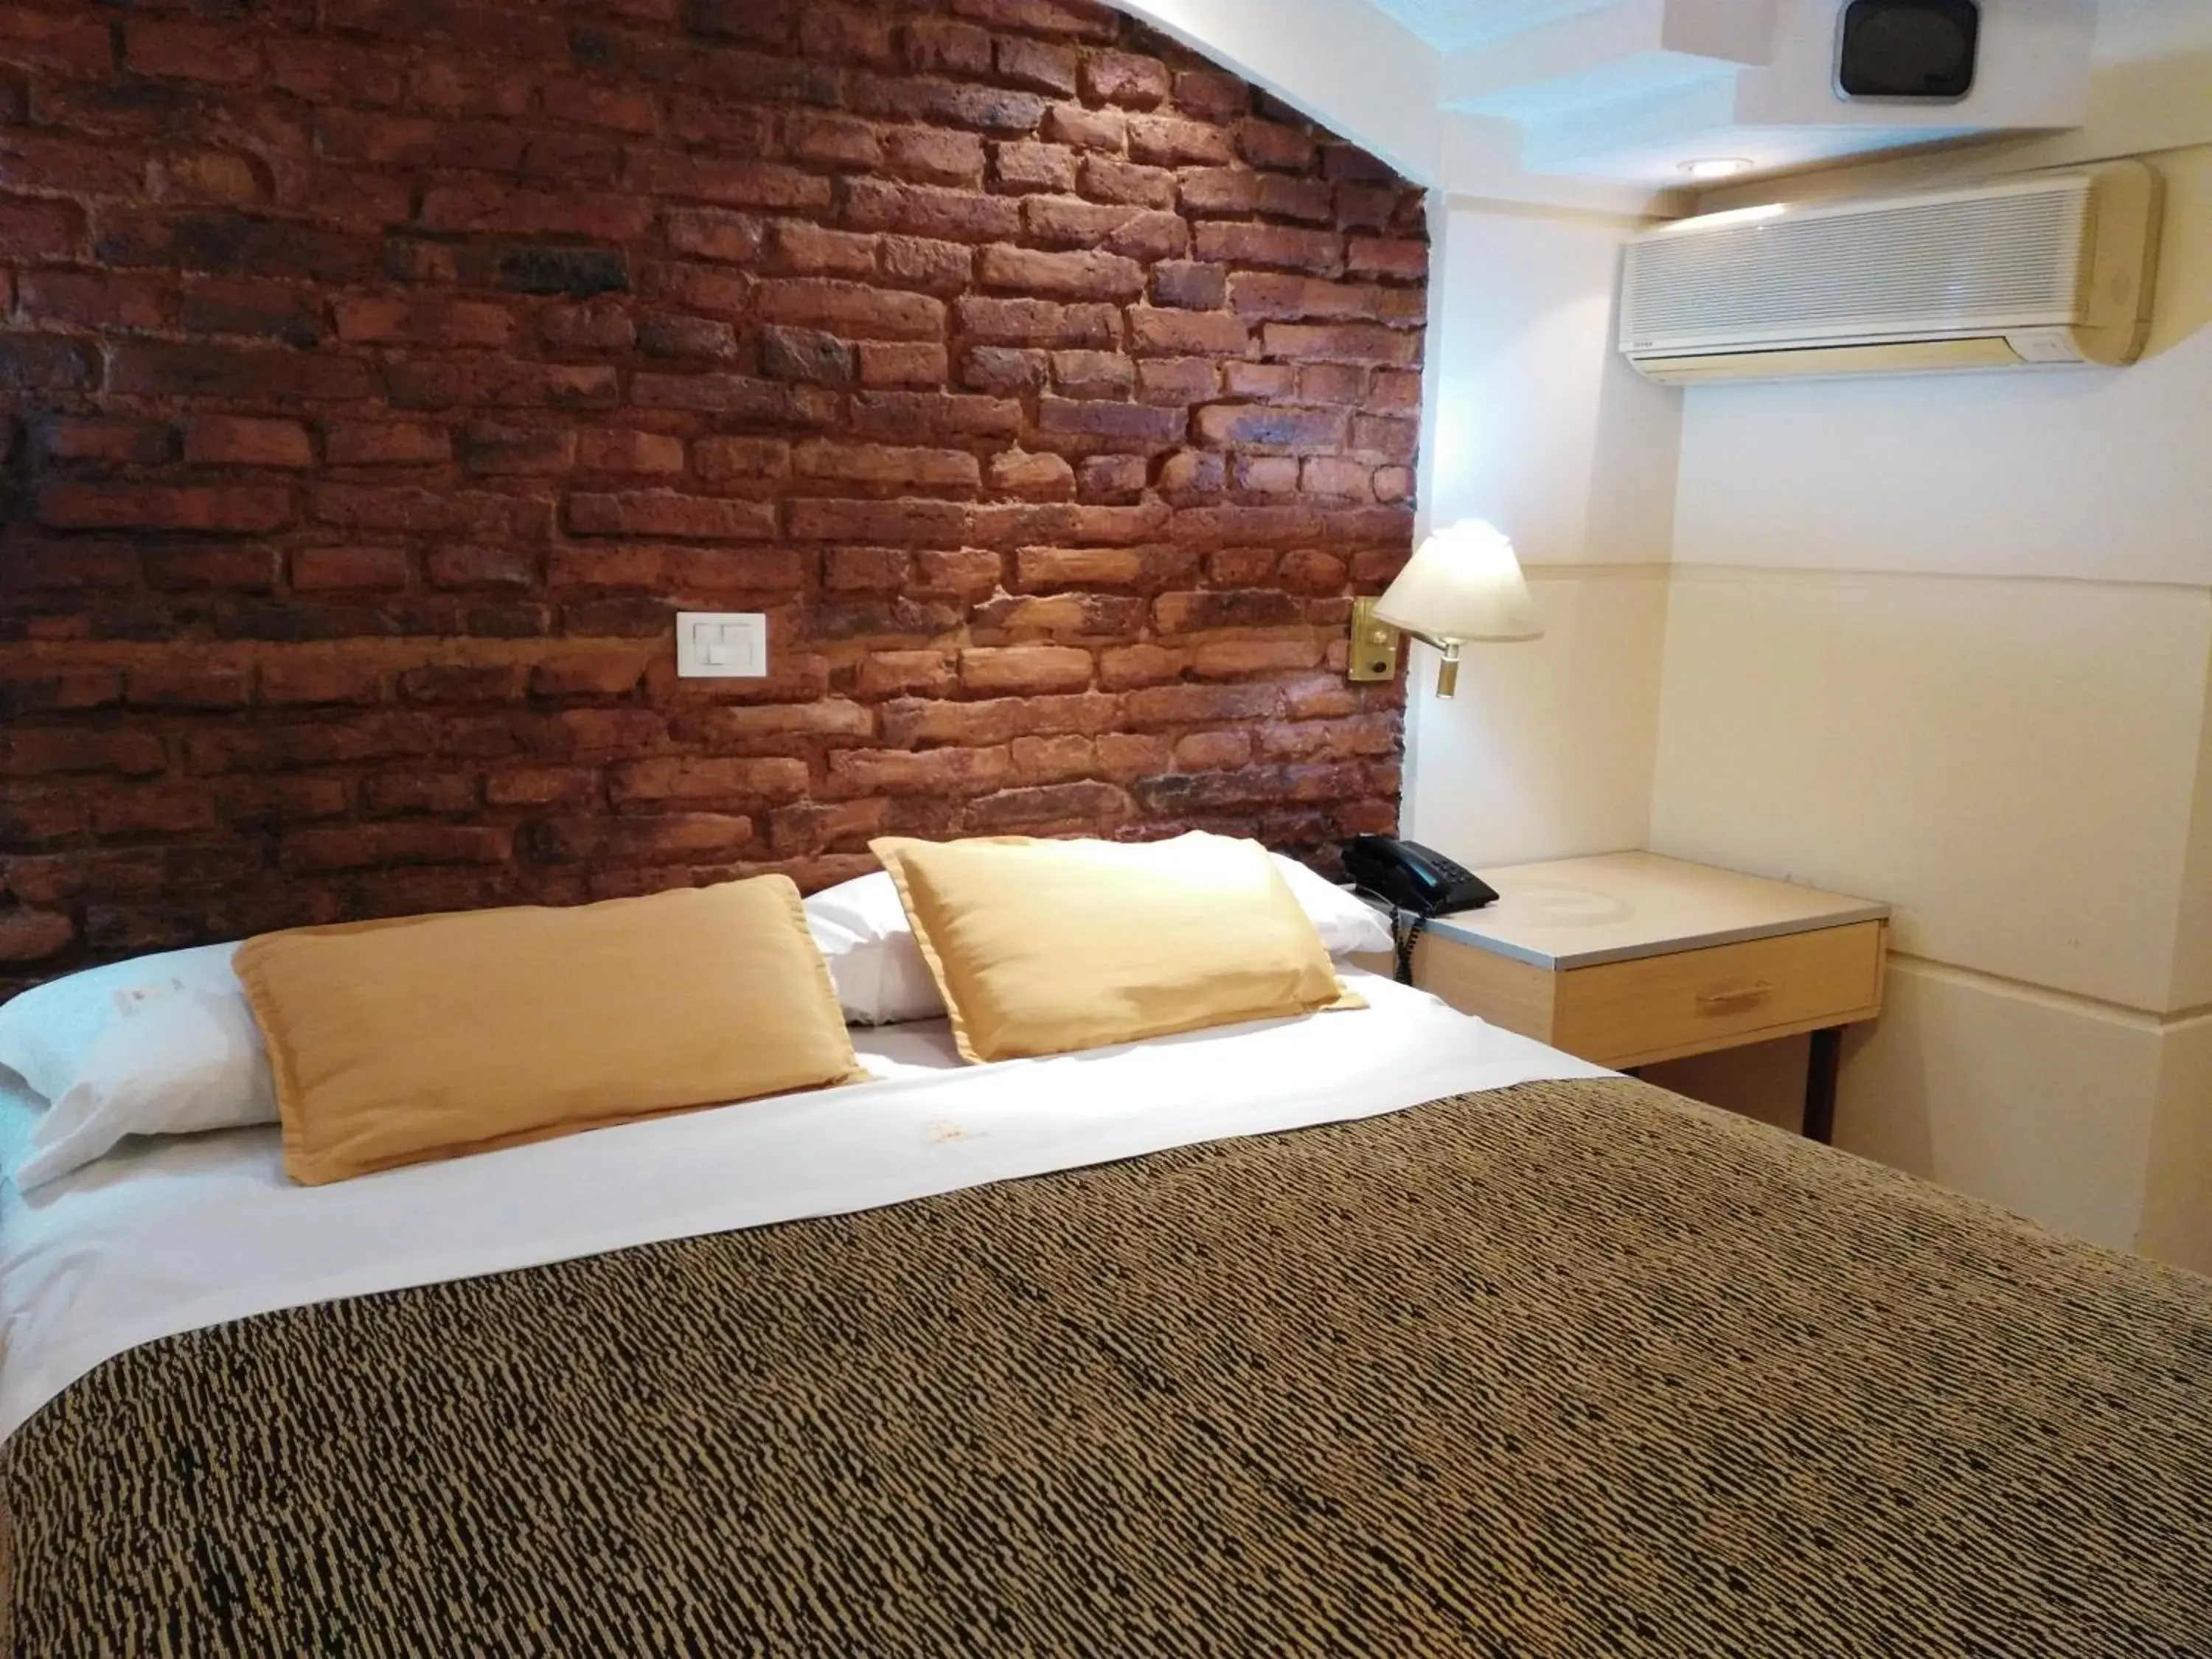 Bedroom, Room Photo in Hotel A&B Internacional